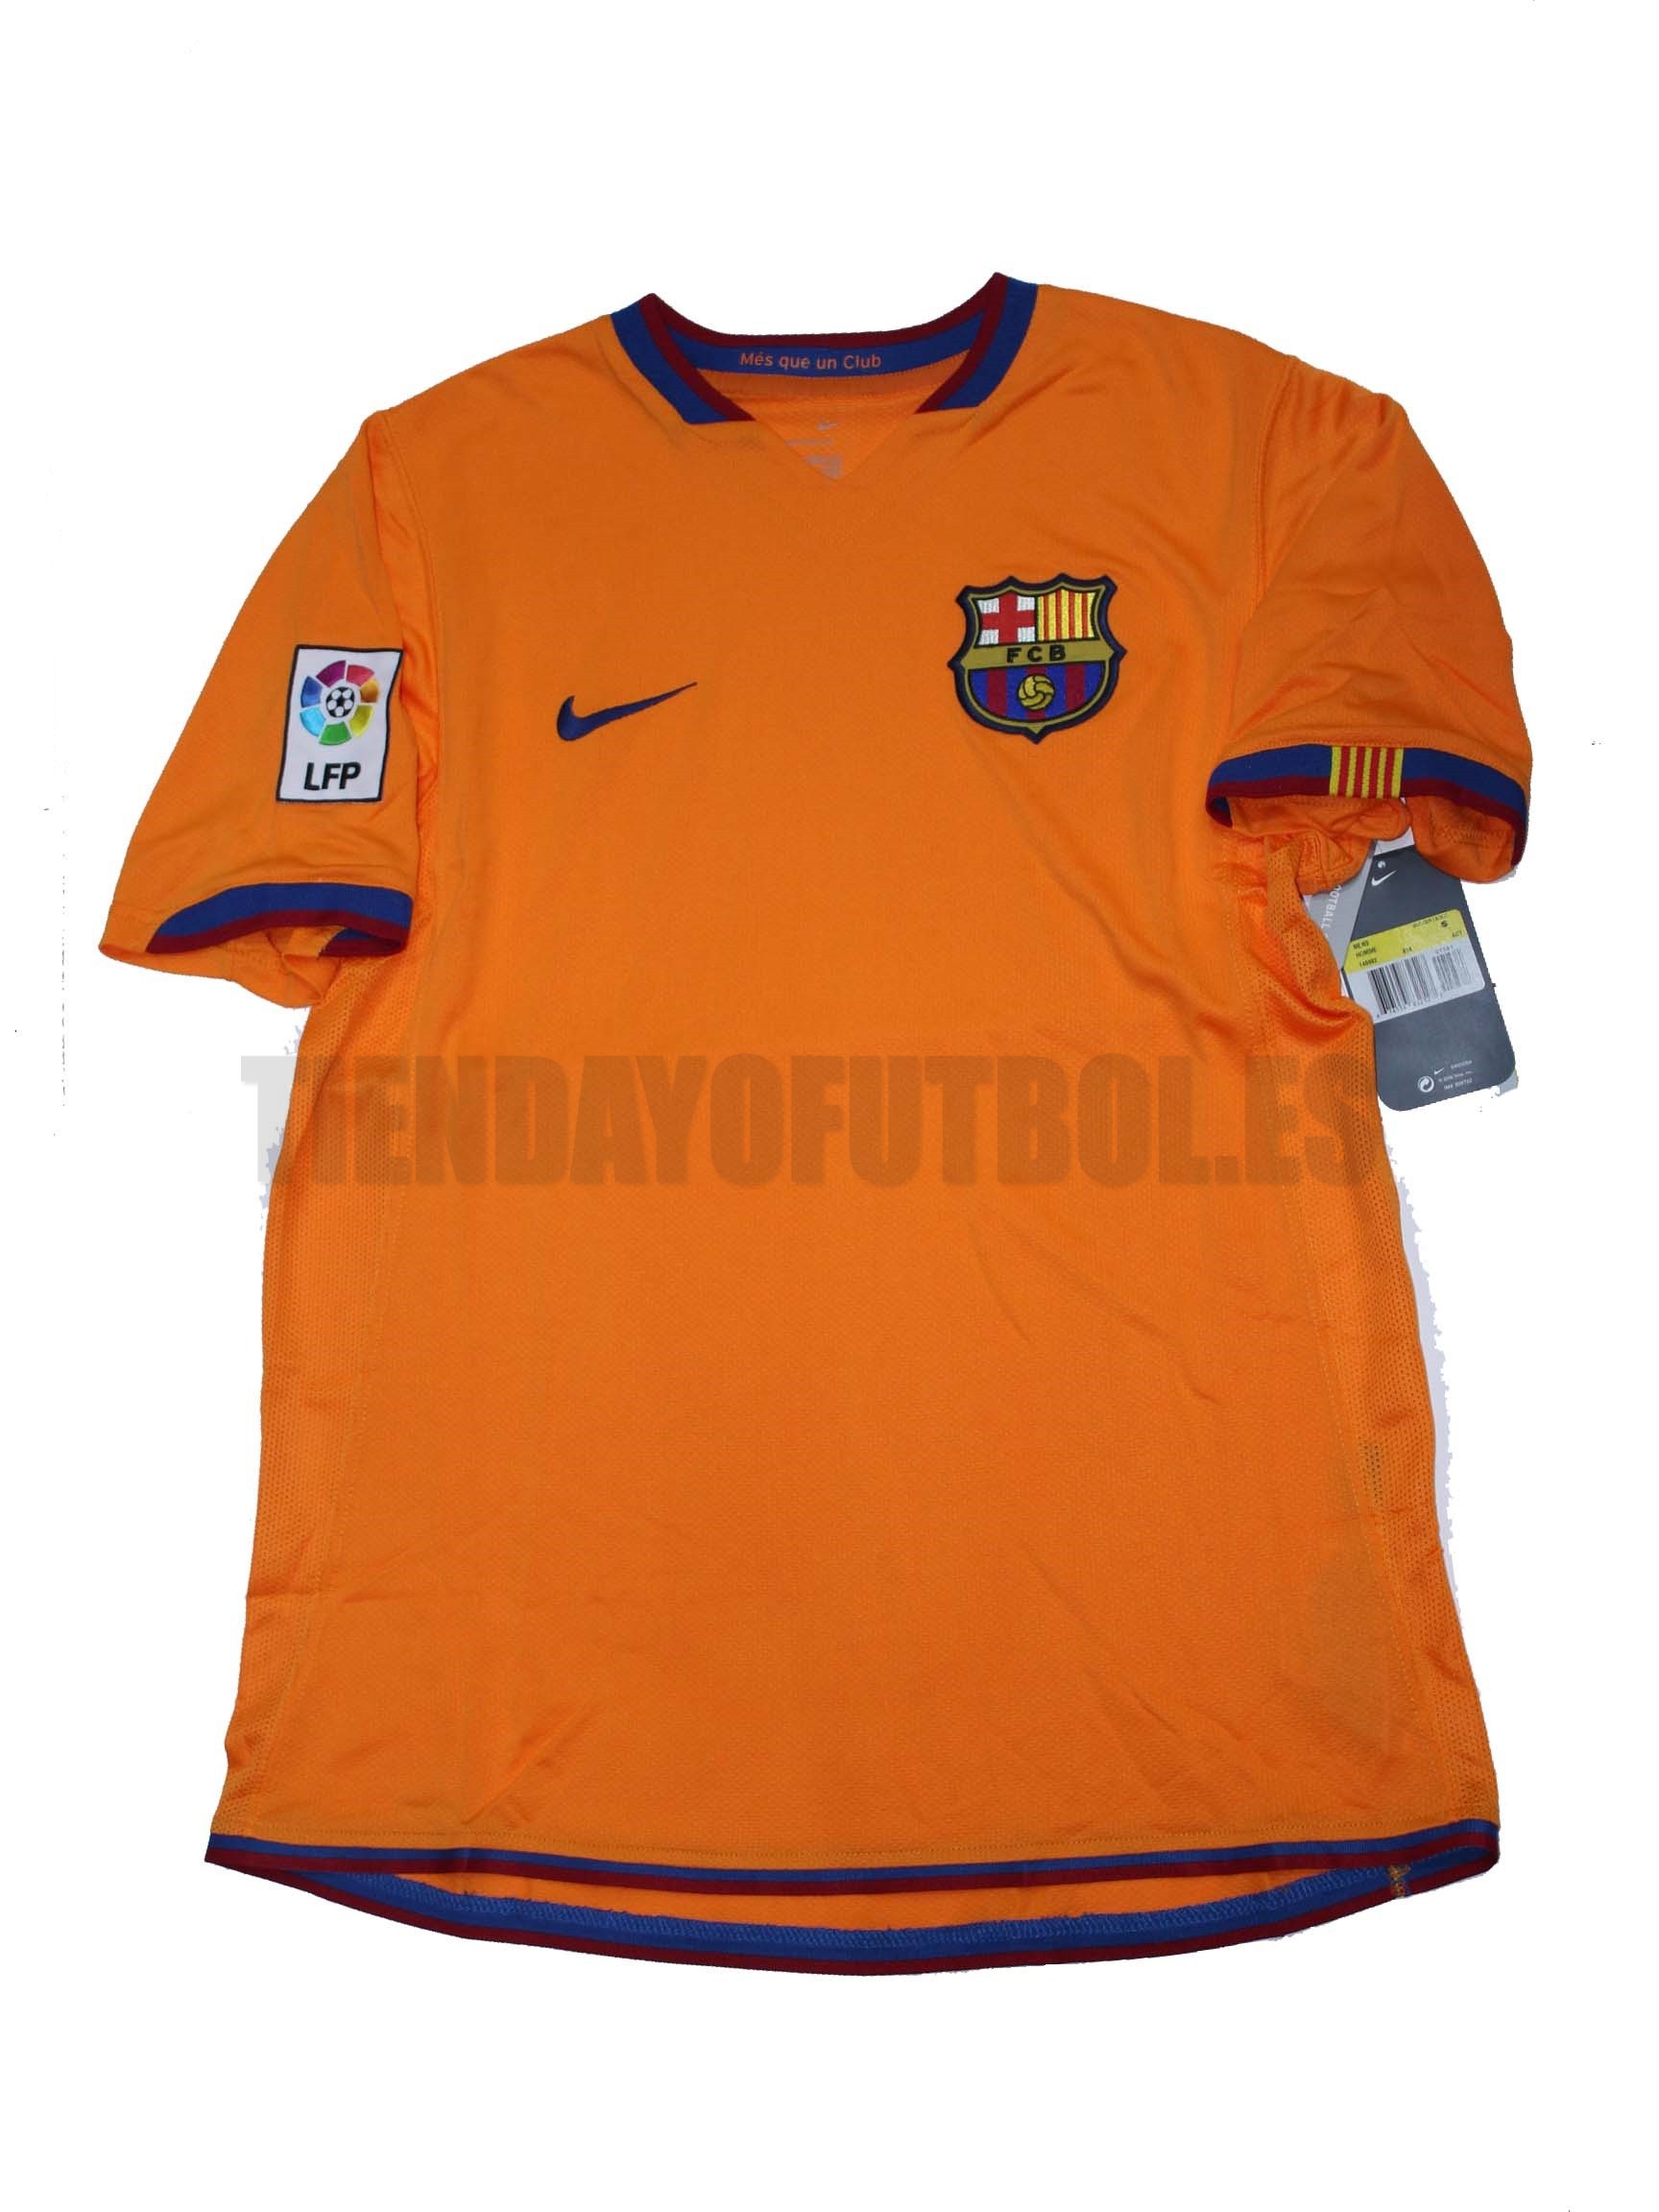 Coleccionista Camiseta 2ª FC Barcelona 2006/07, Barça camiseta 06/07